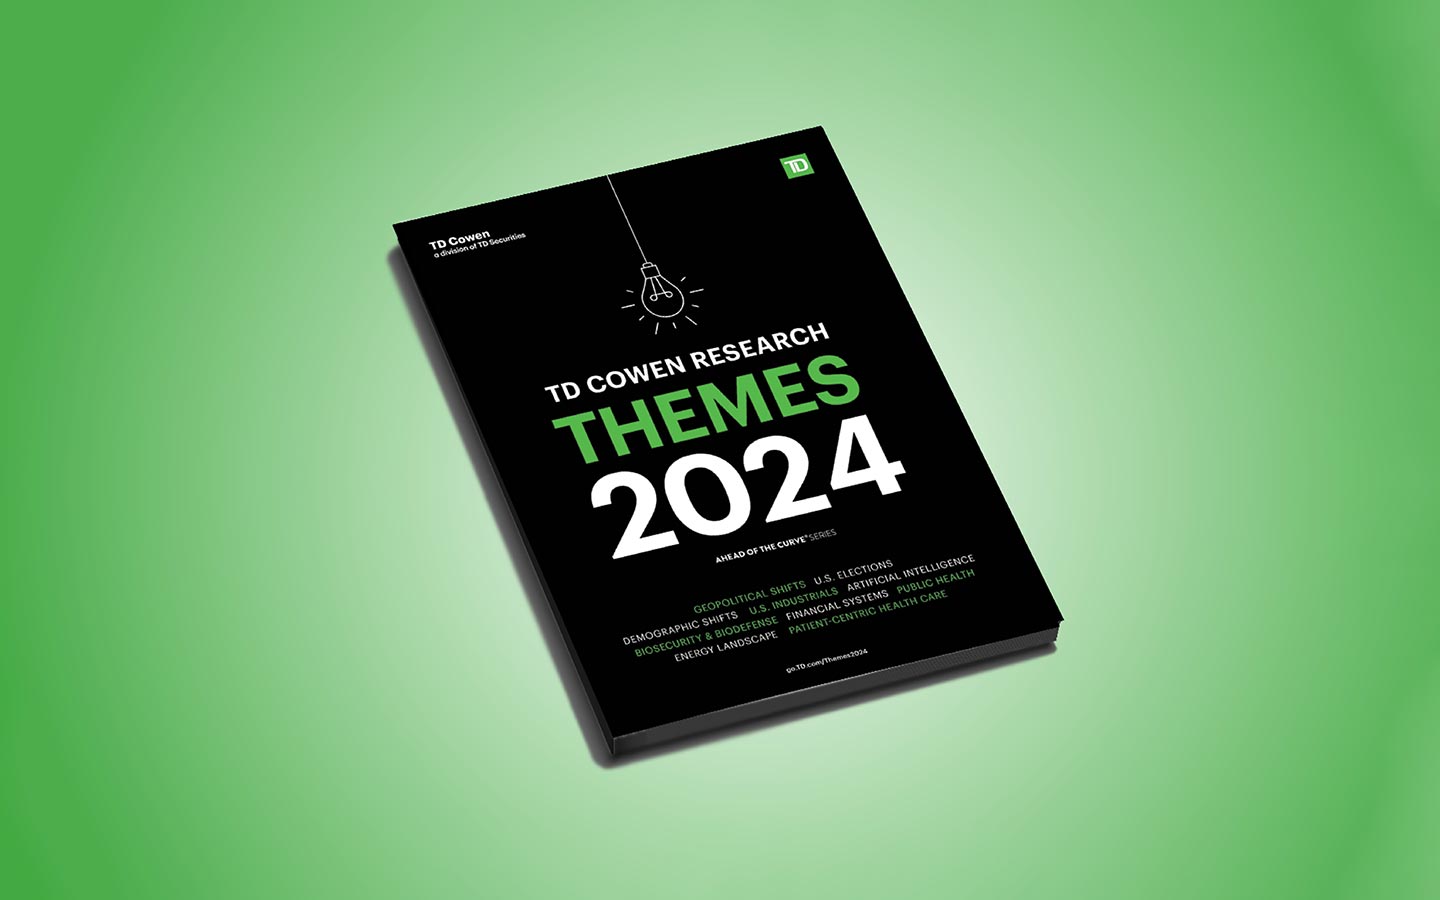 TD Cowen Research: Themes 2024 Handbook